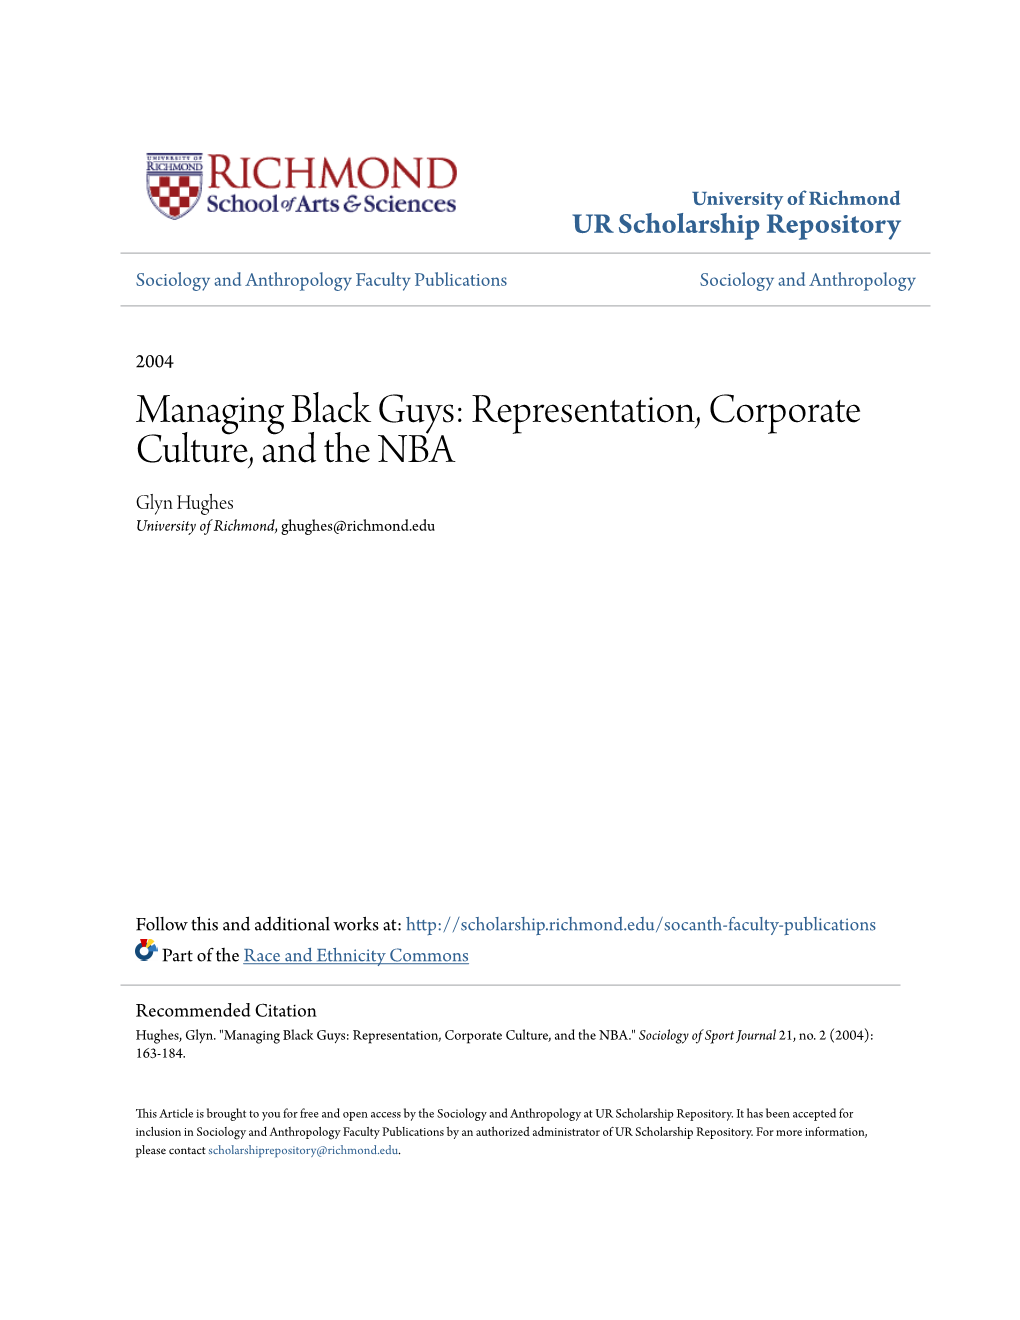 Managing Black Guys: Representation, Corporate Culture, and the NBA Glyn Hughes University of Richmond, Ghughes@Richmond.Edu